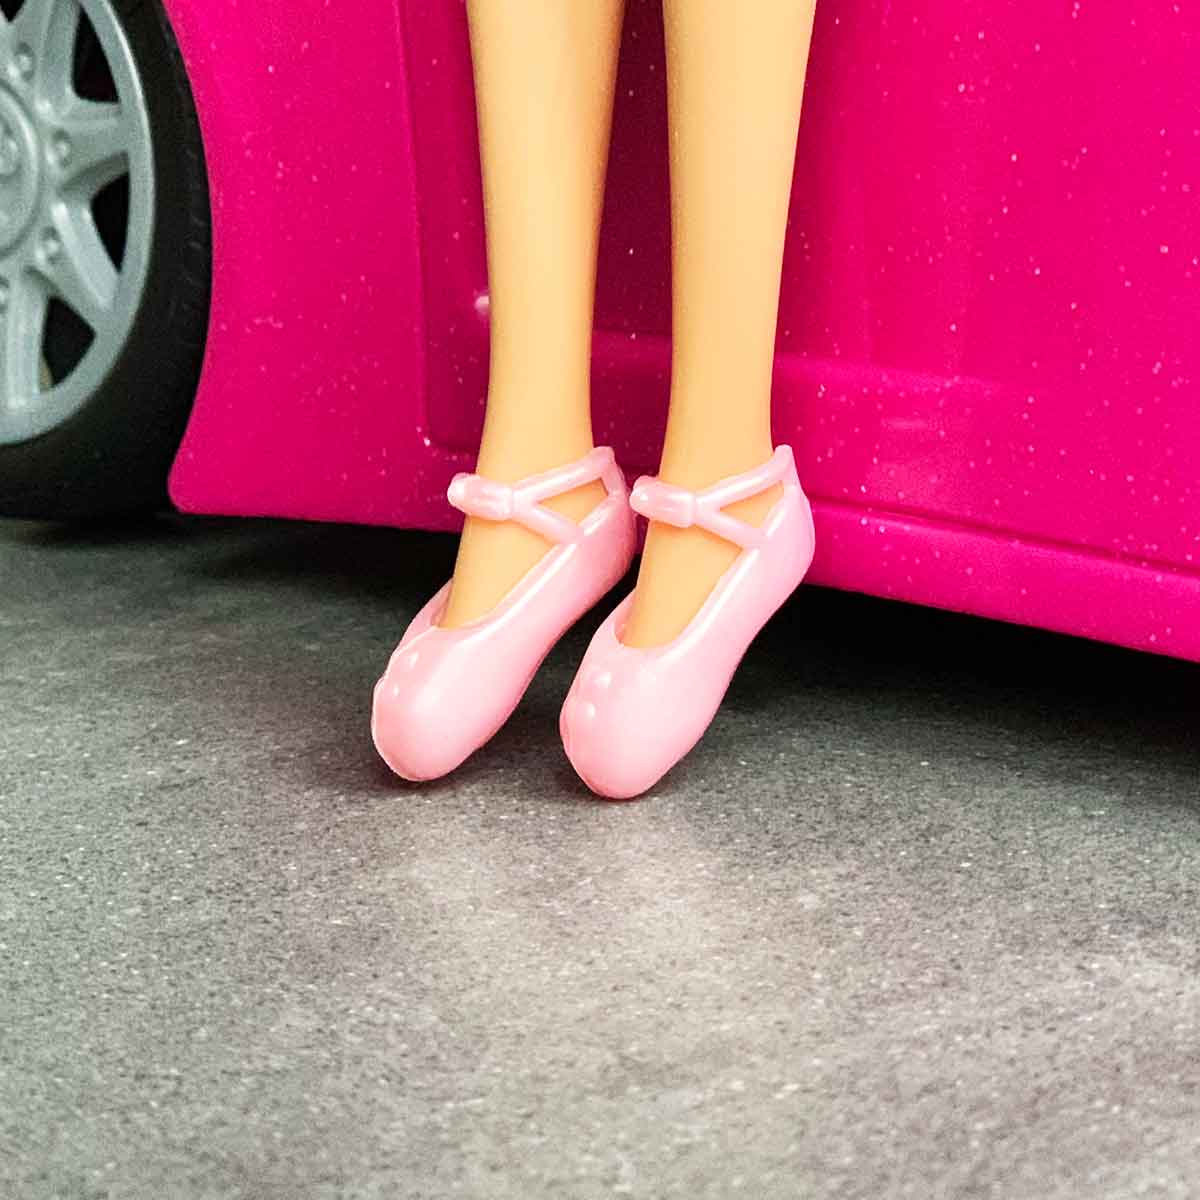 Barbie schoenen glimmende roze ballerina’s met riem